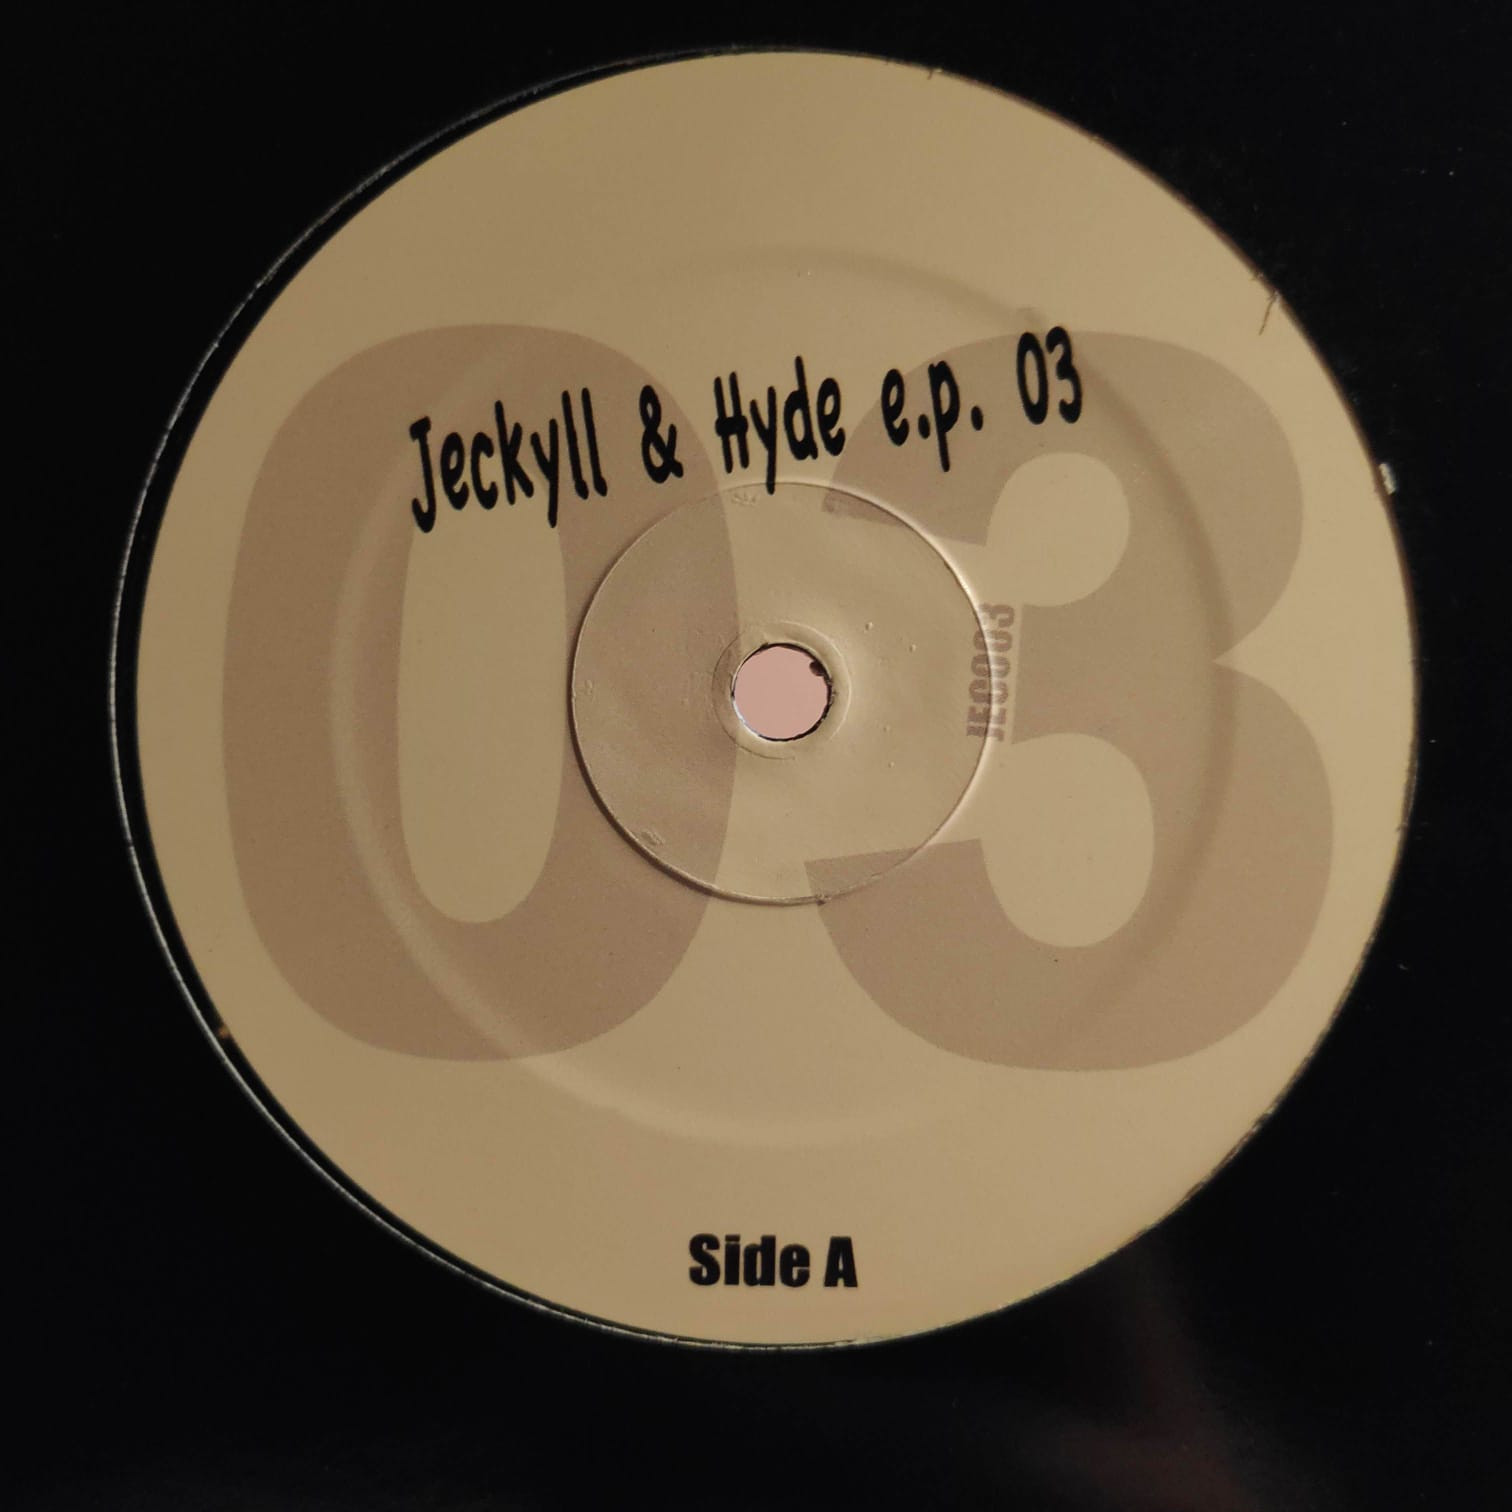 (22542) Jeckyll & Hyde ep 03